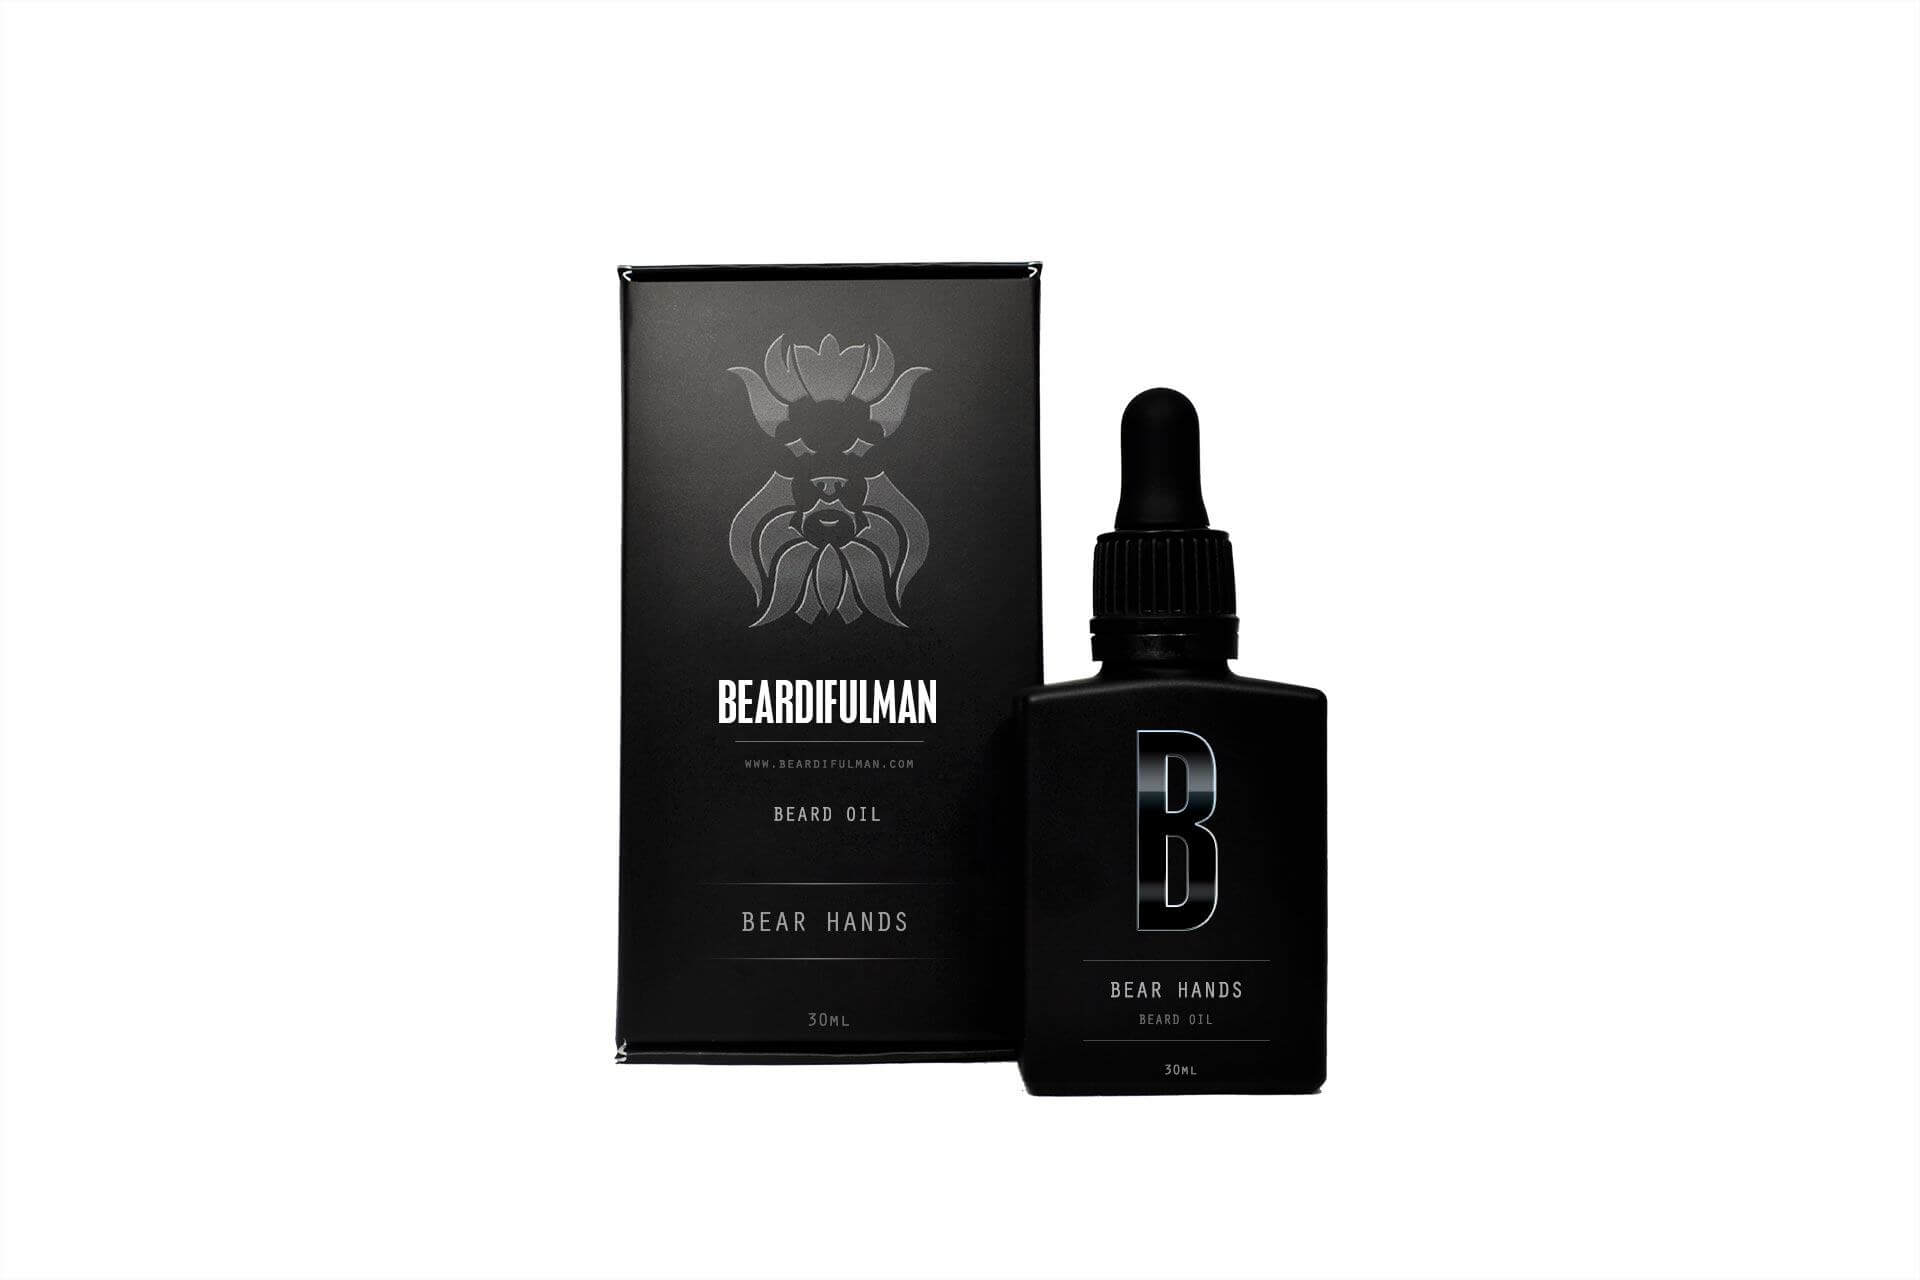 Bear Hands Beard Oil - Premium beard care oil from Beardifulman